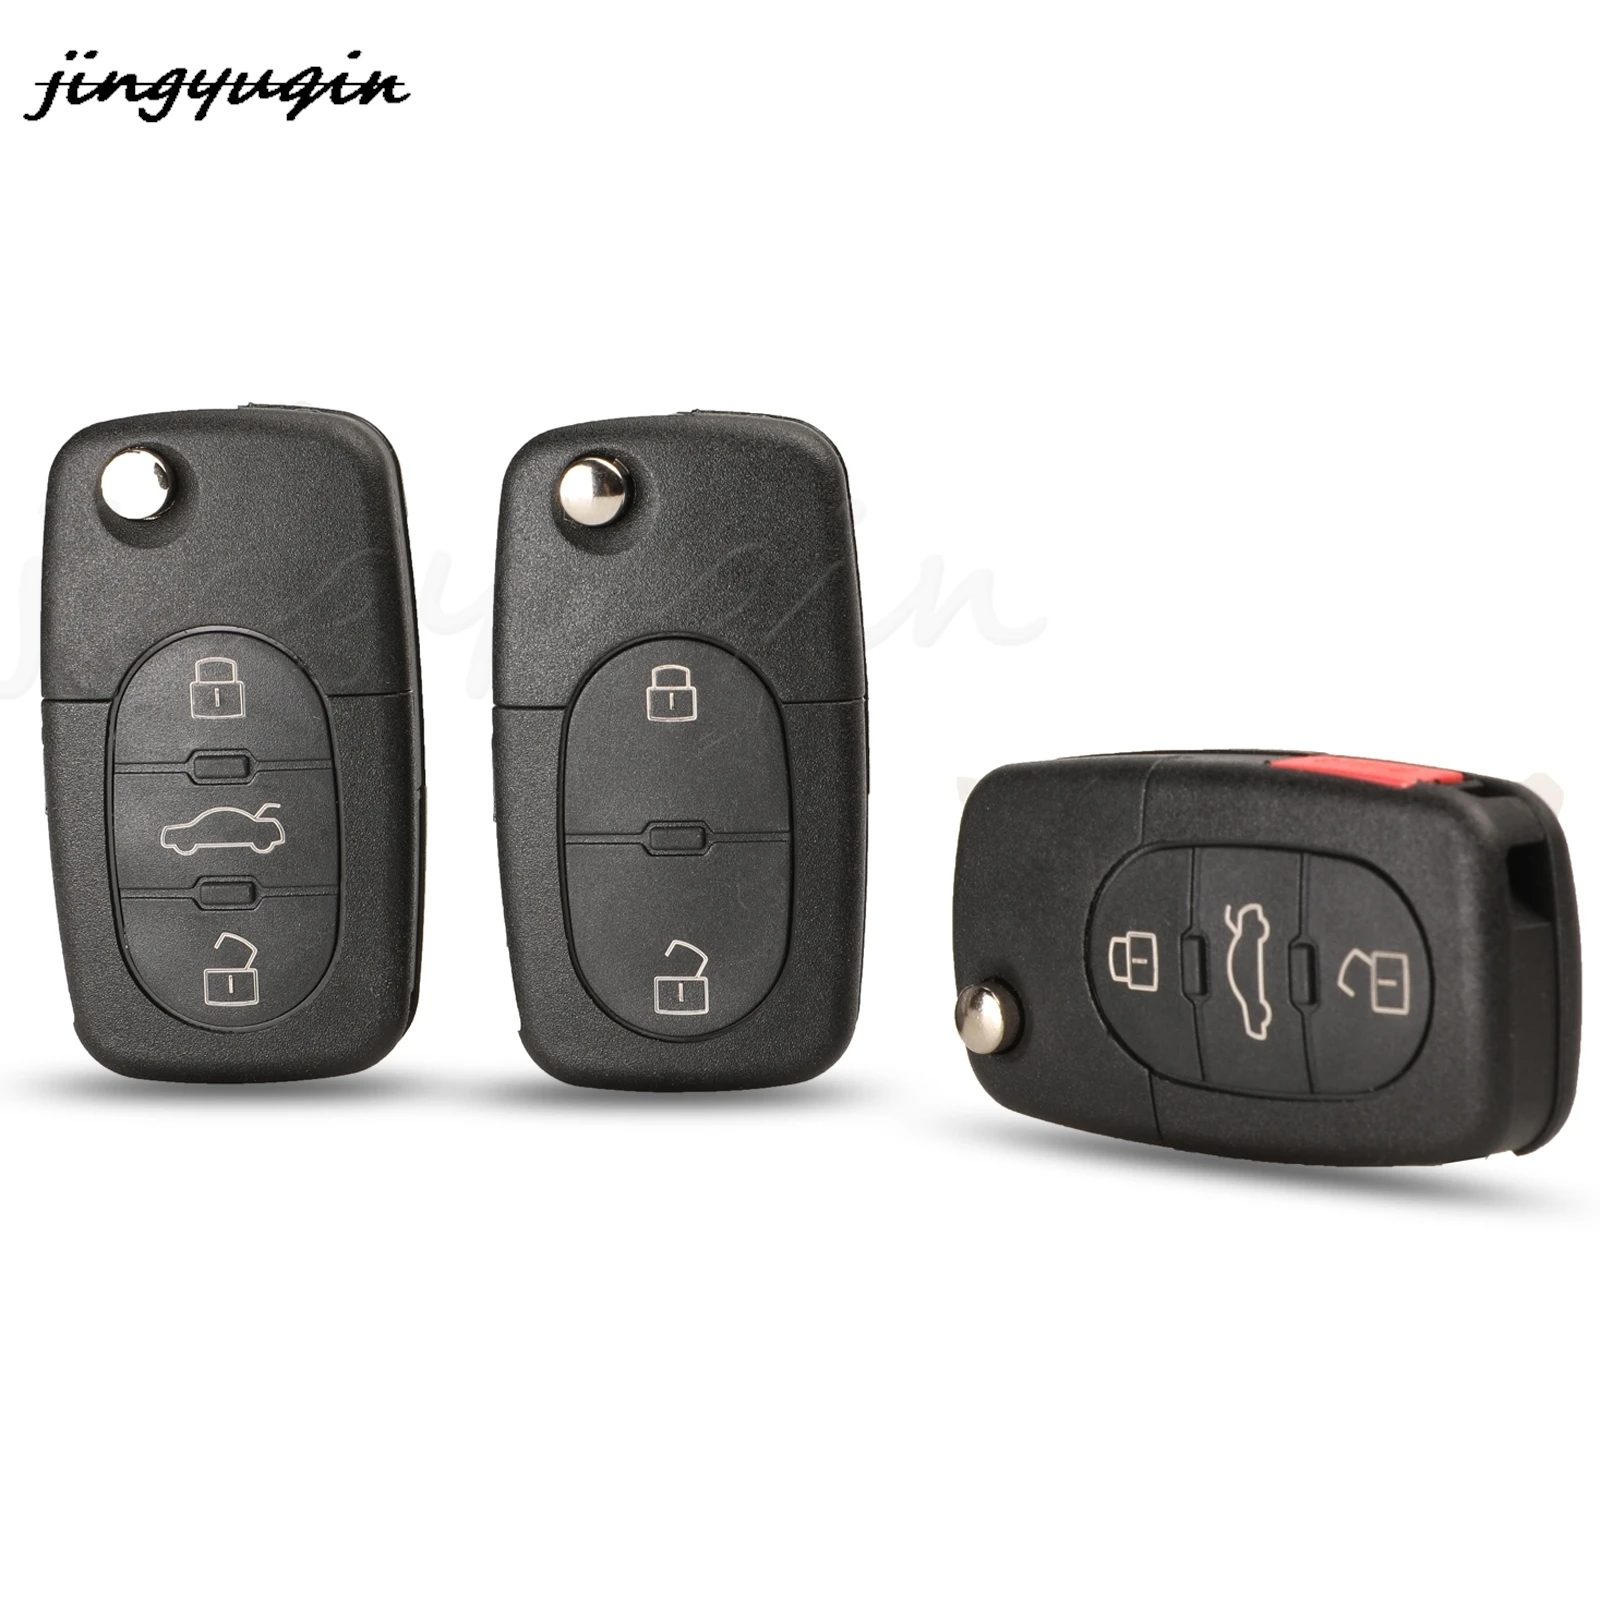 

jingyuqin 10pcs 2/3/4 Buttons Remote Car Key Shell Case For Audi TT A2 A3 A4 A6 A8 Quattro With Blade CR1620/CR2032 Holder